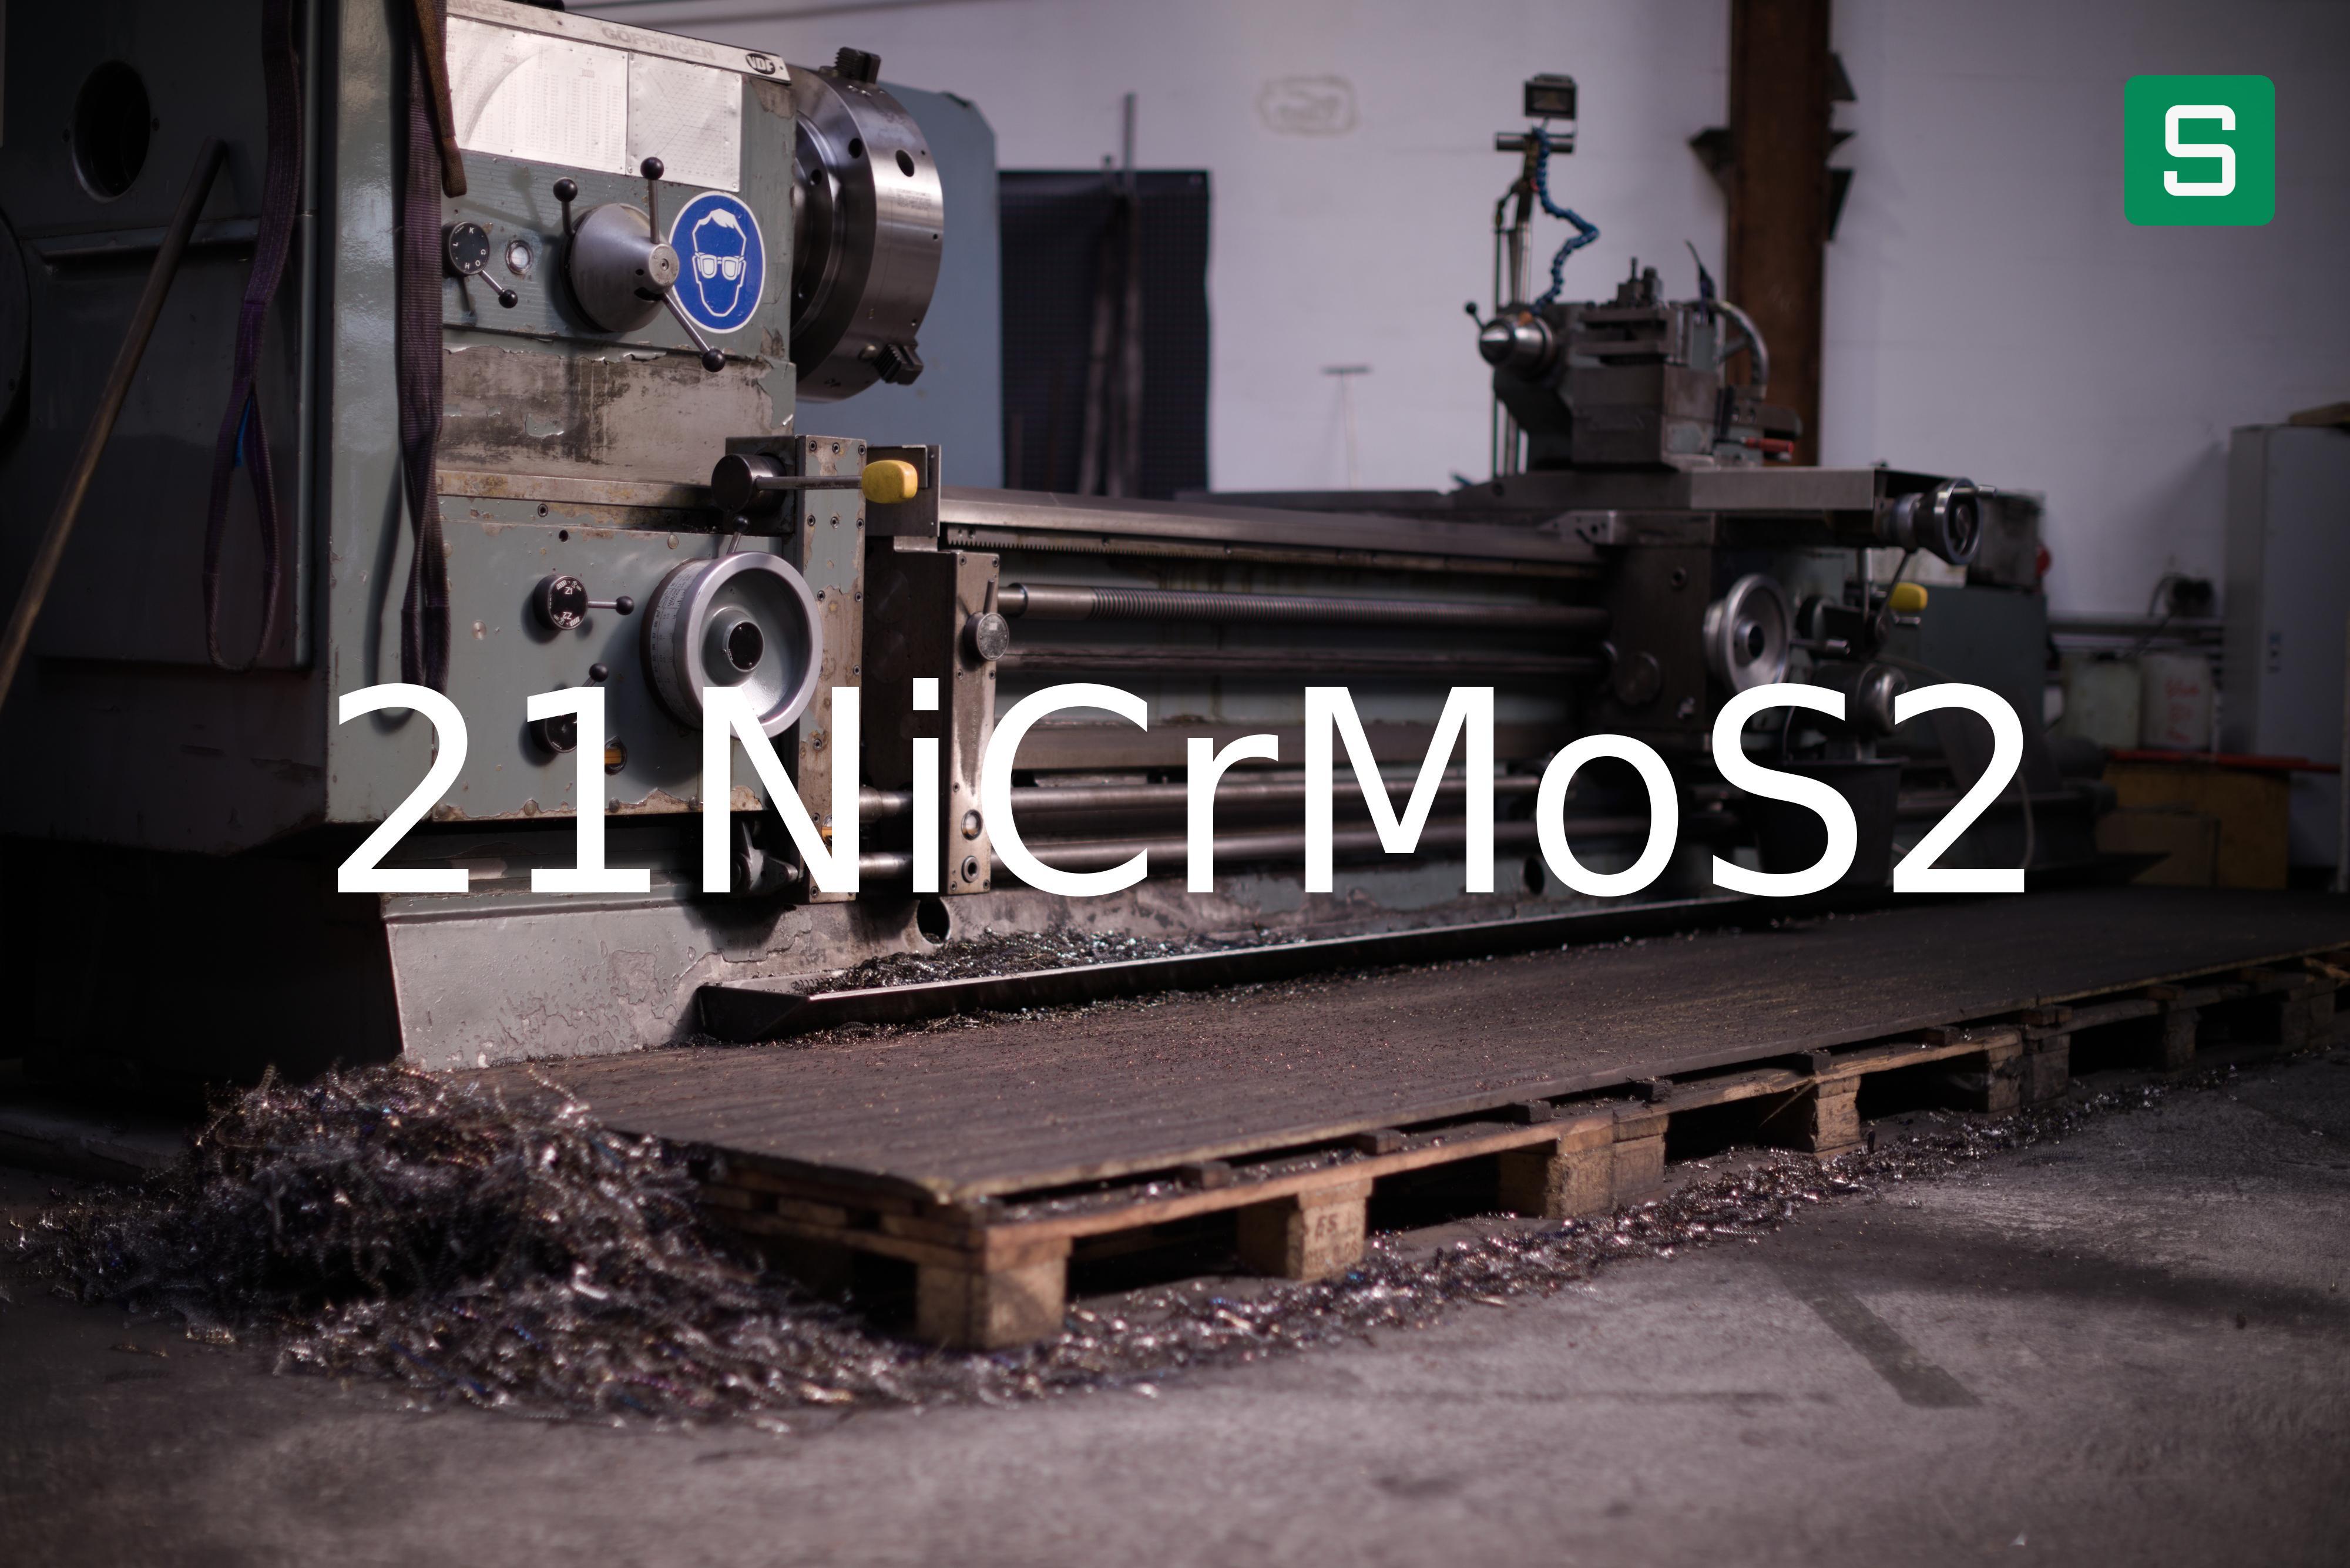 Steel Material: 21NiCrMoS2